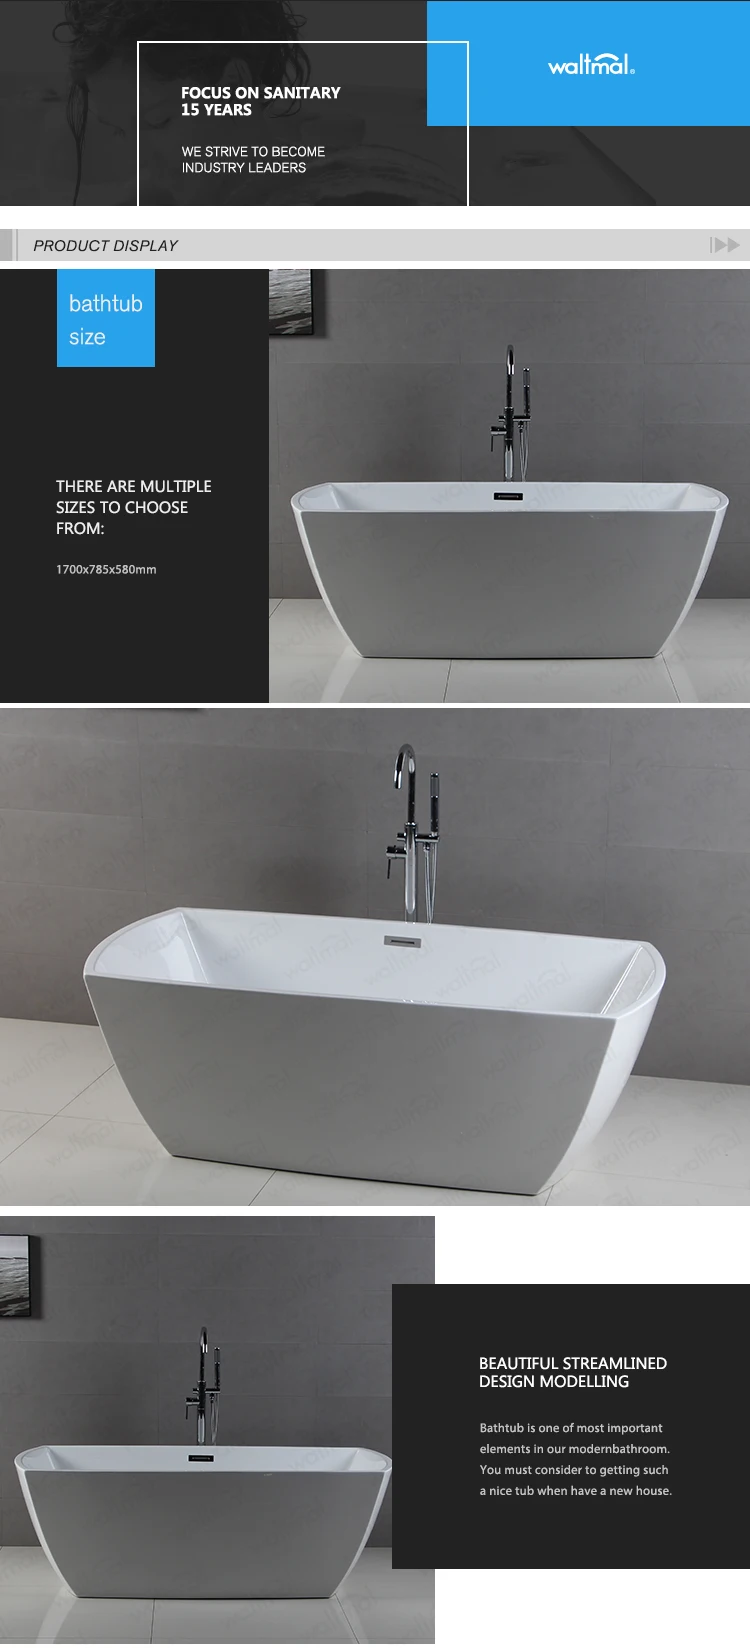 Chinese supplier CUPC bath tub acrylic overflow drain cover bathtub bathtub bathtubs